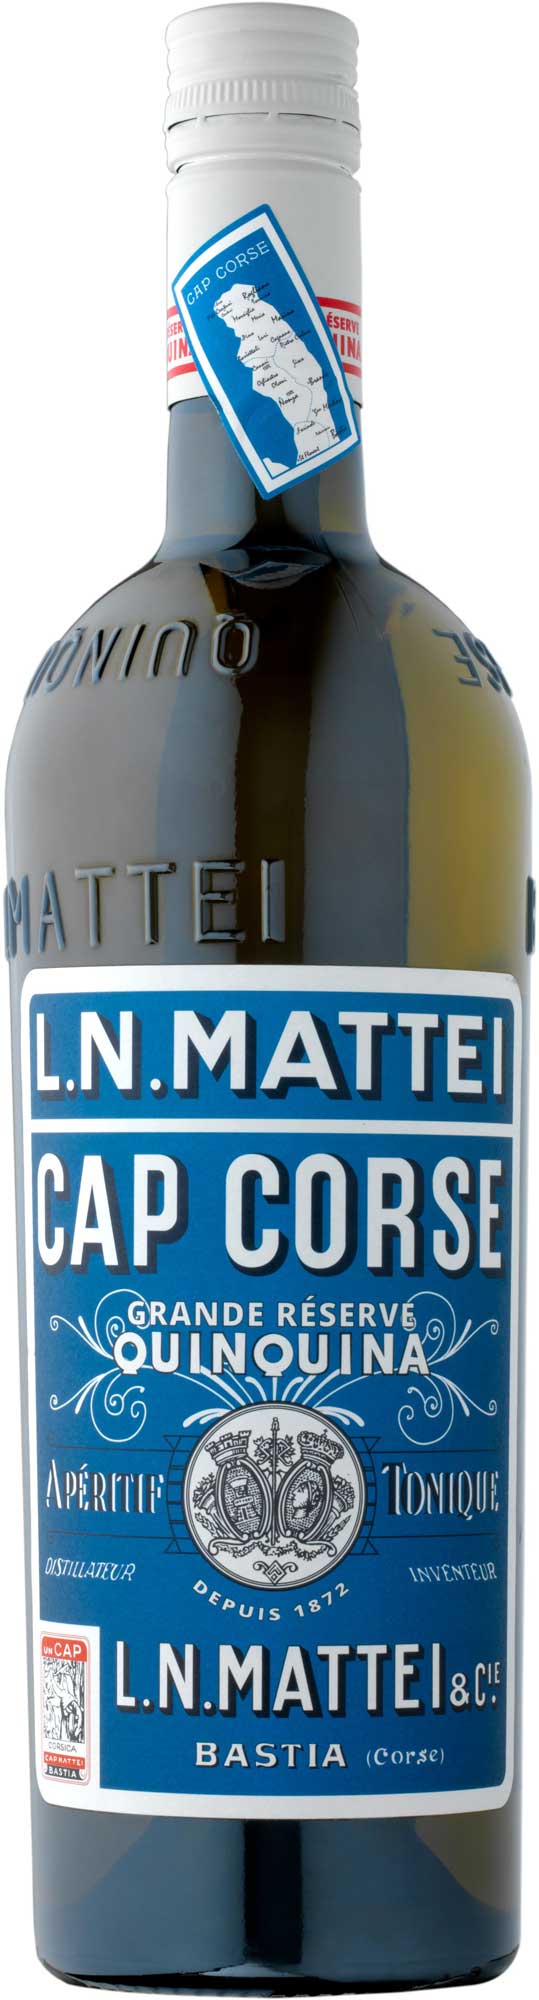 L.N. Mattei Cap Corse Blanc Quinquina 750ml